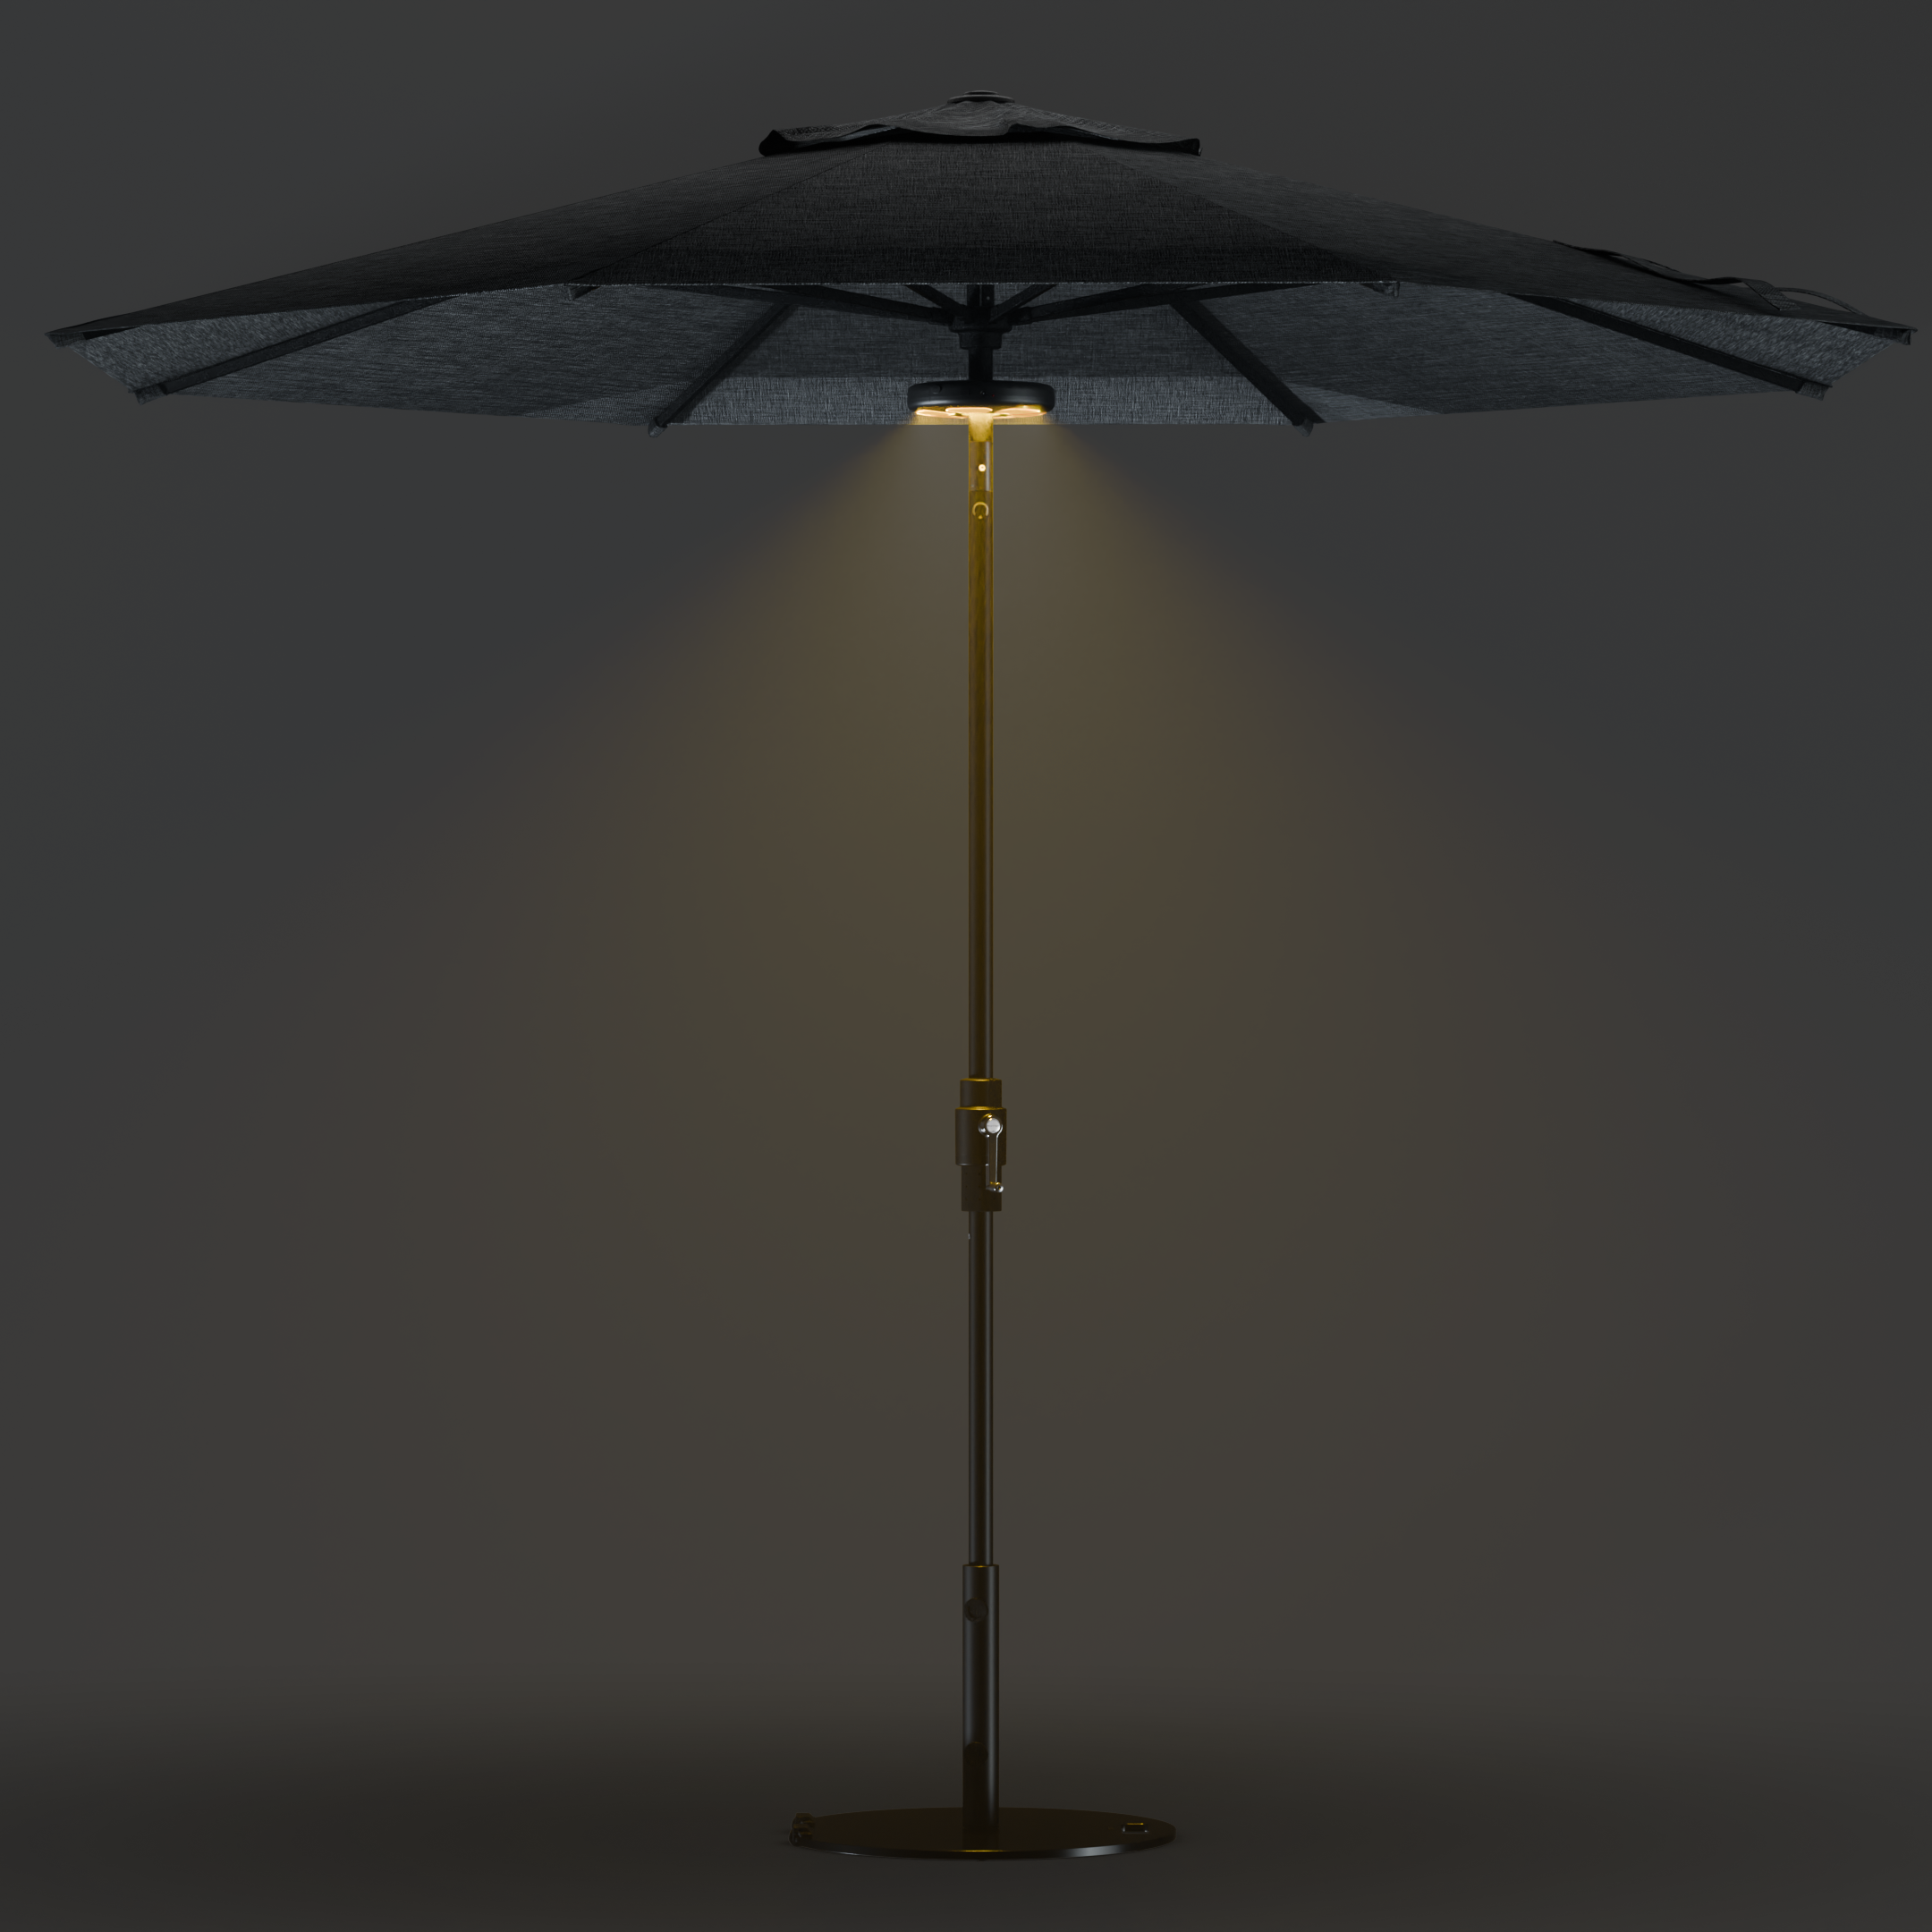 The LED Umbrella Light